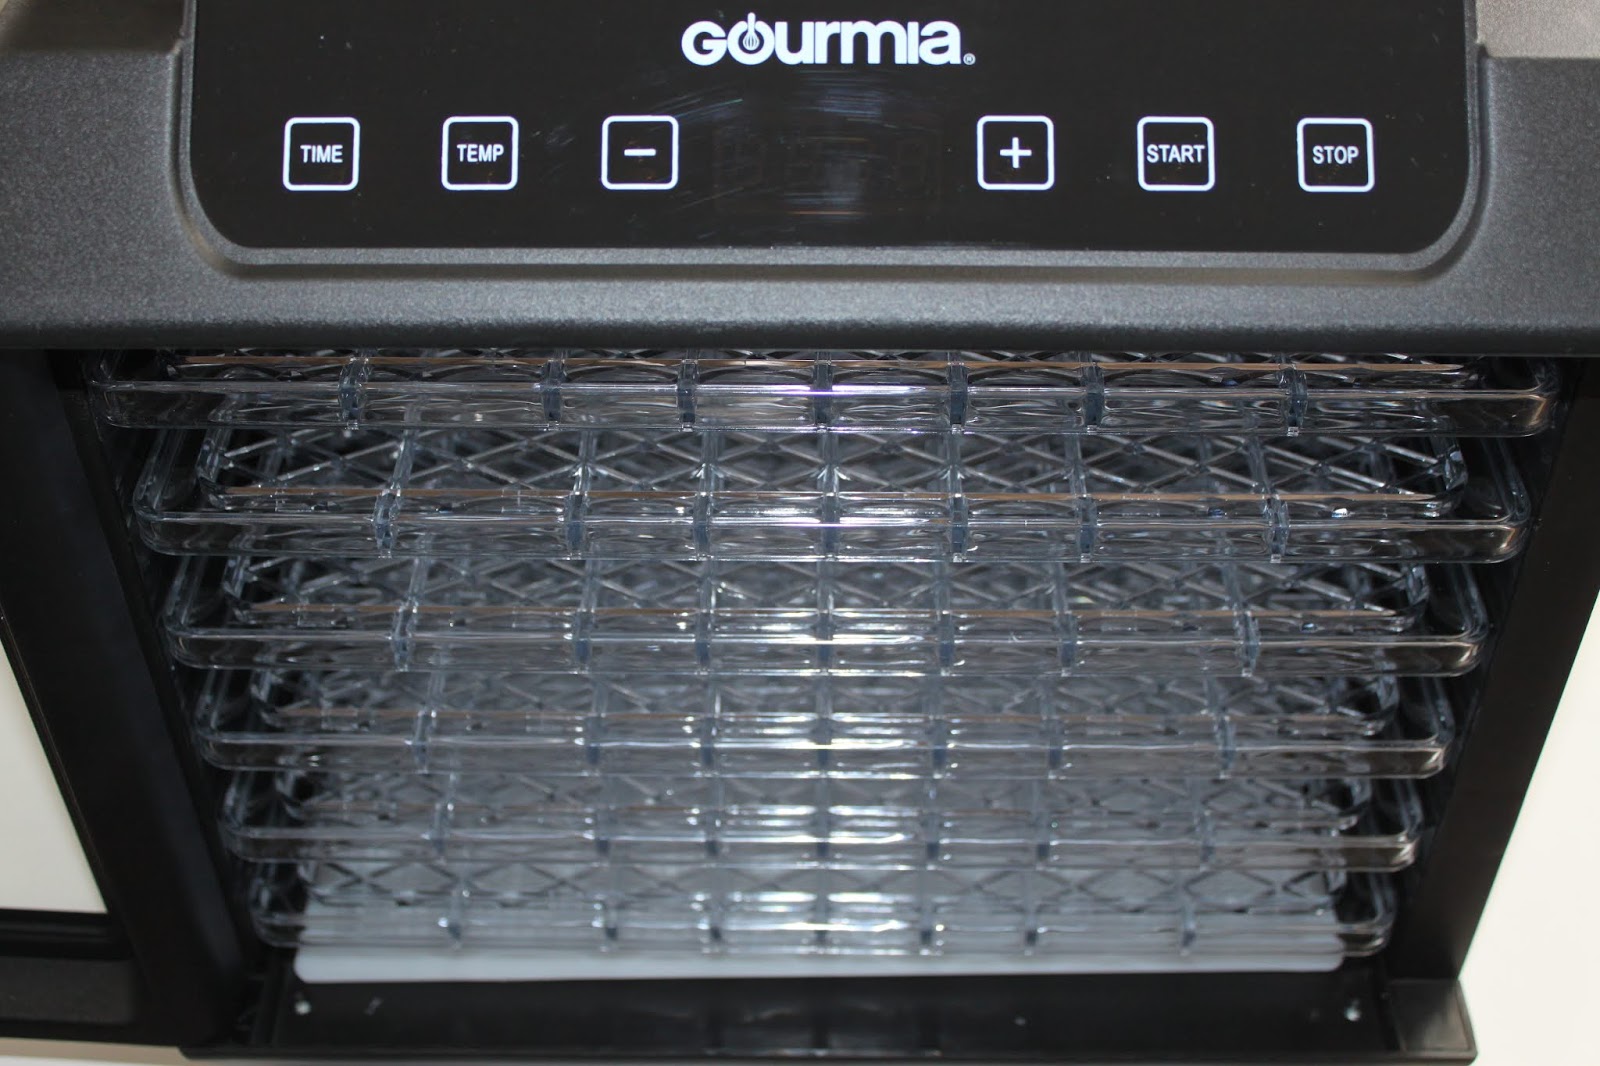 Gourmia gfd1680 Premium Countertop Food Dehydrator 6 Drying Shelves